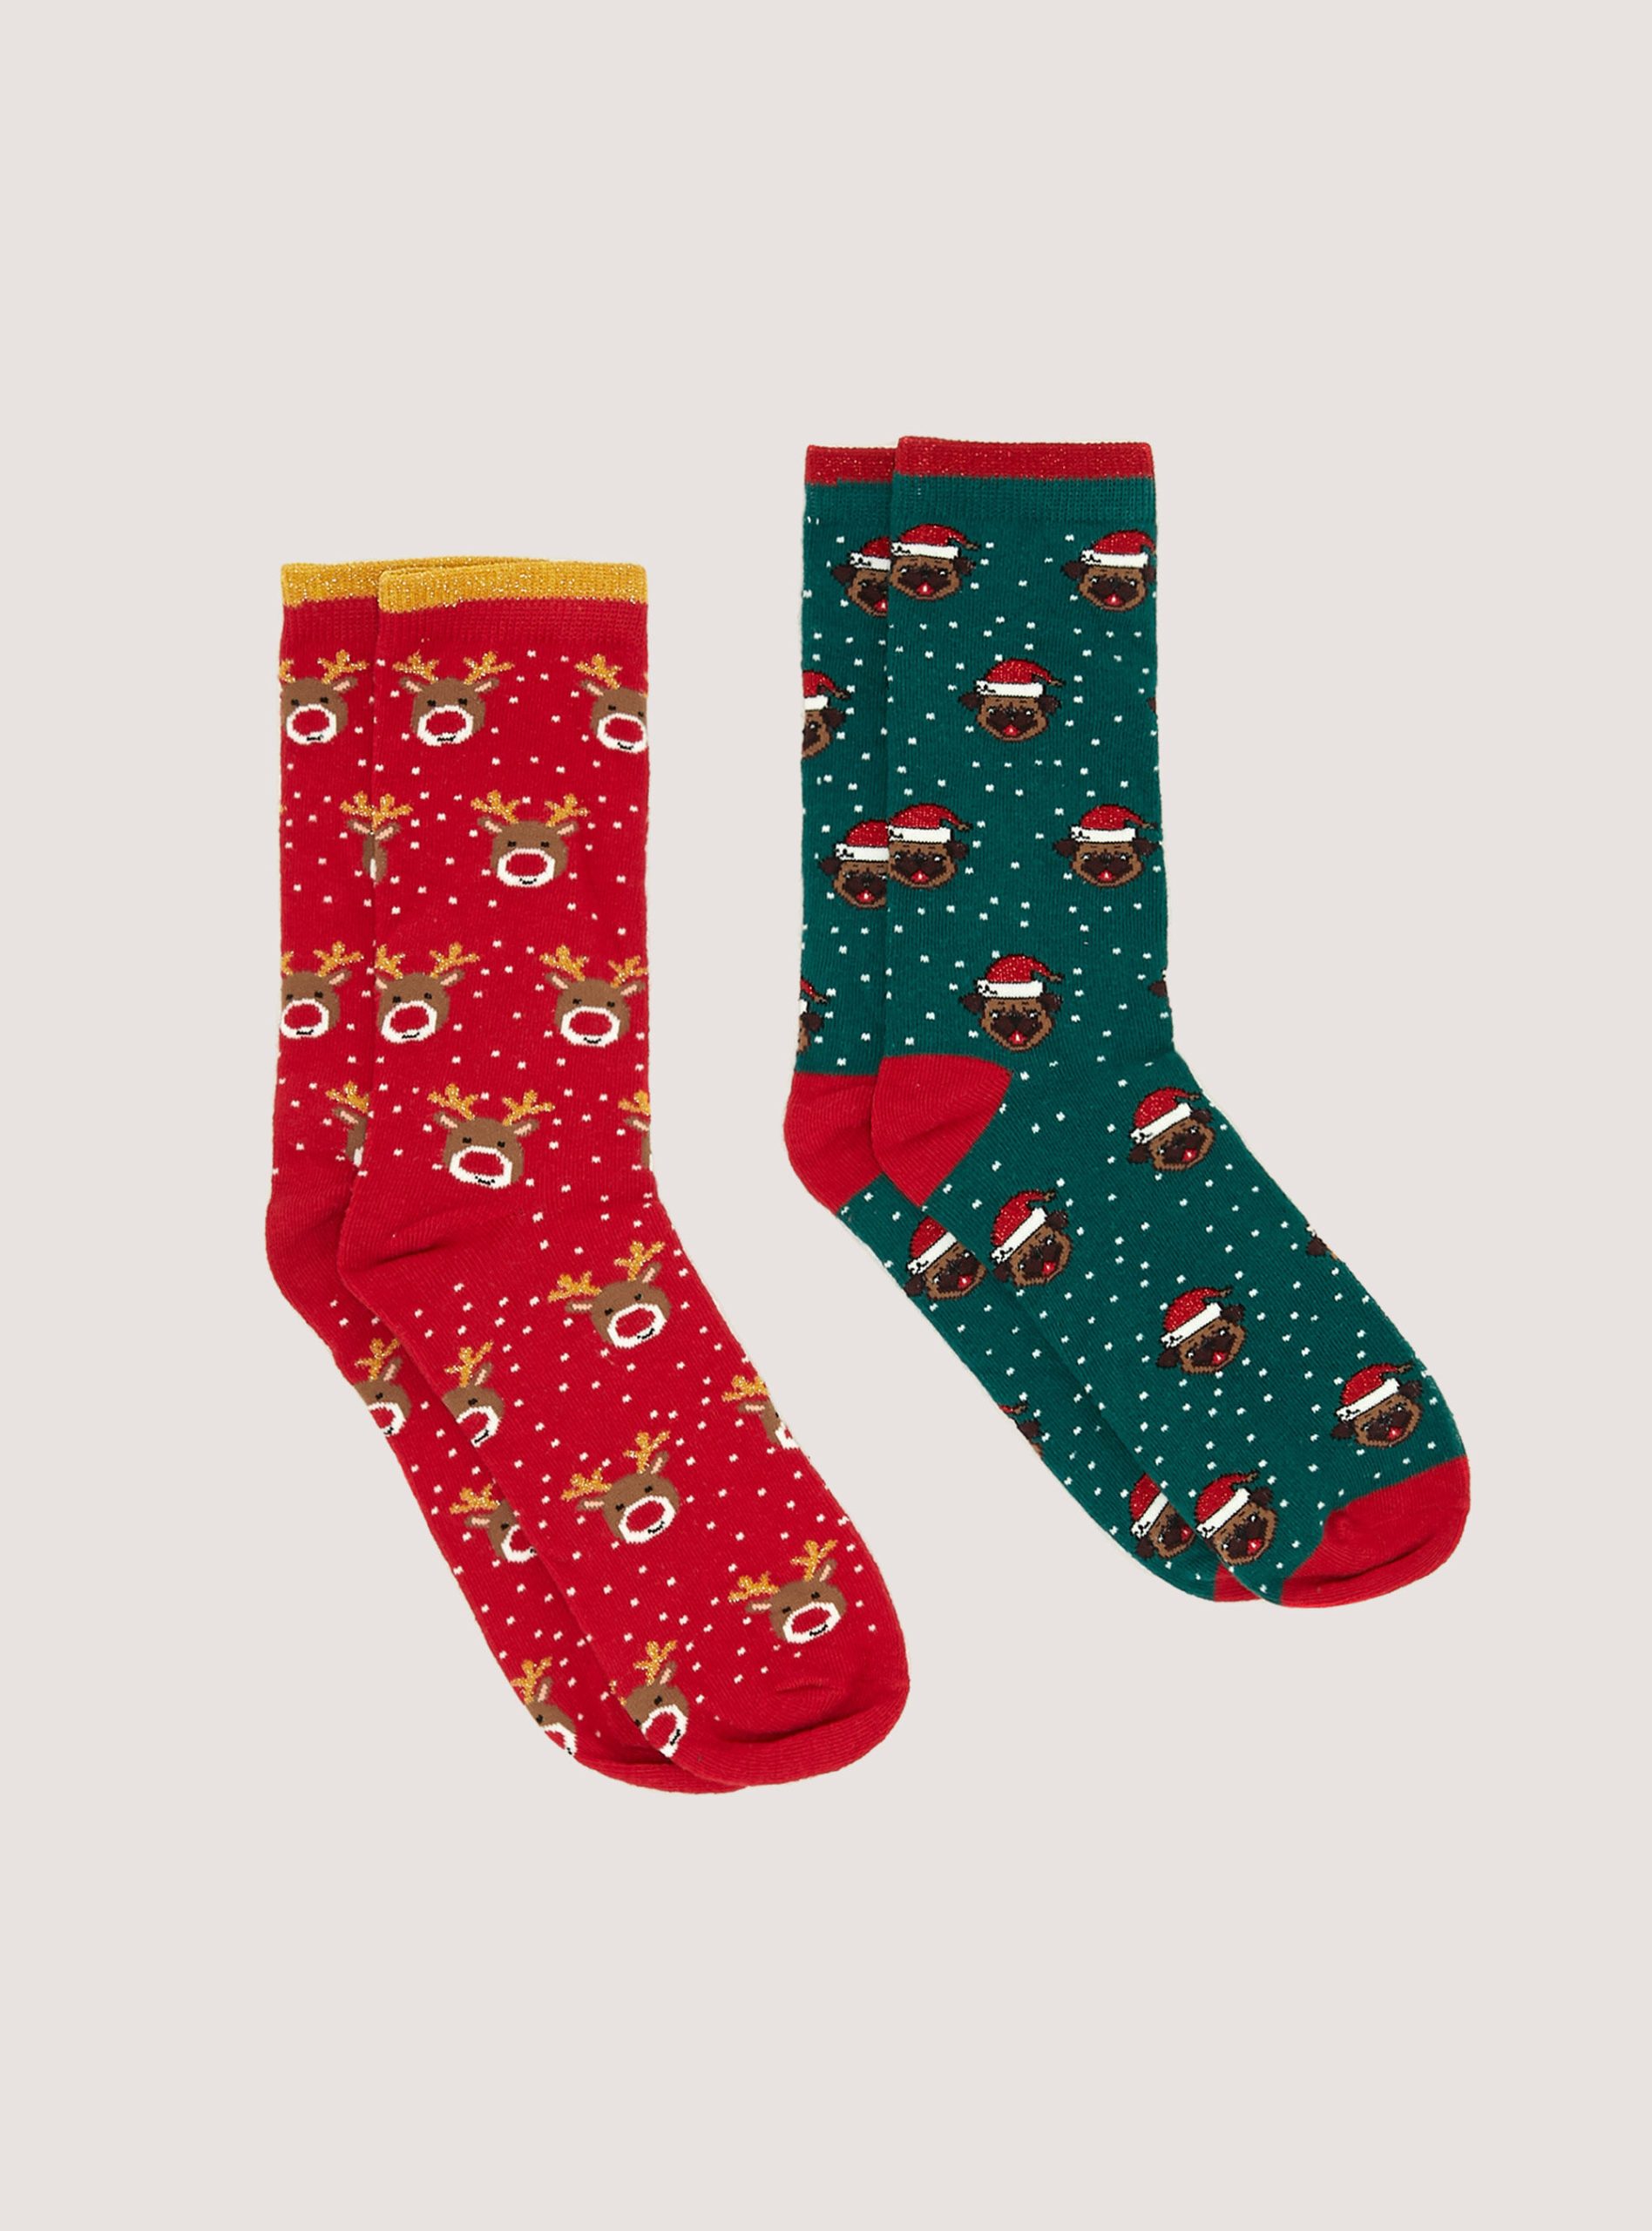 Alcott Socken Frauen Rein Reindeer Effizienz Set Of 2 Pairs Of Christmas Socks – 1